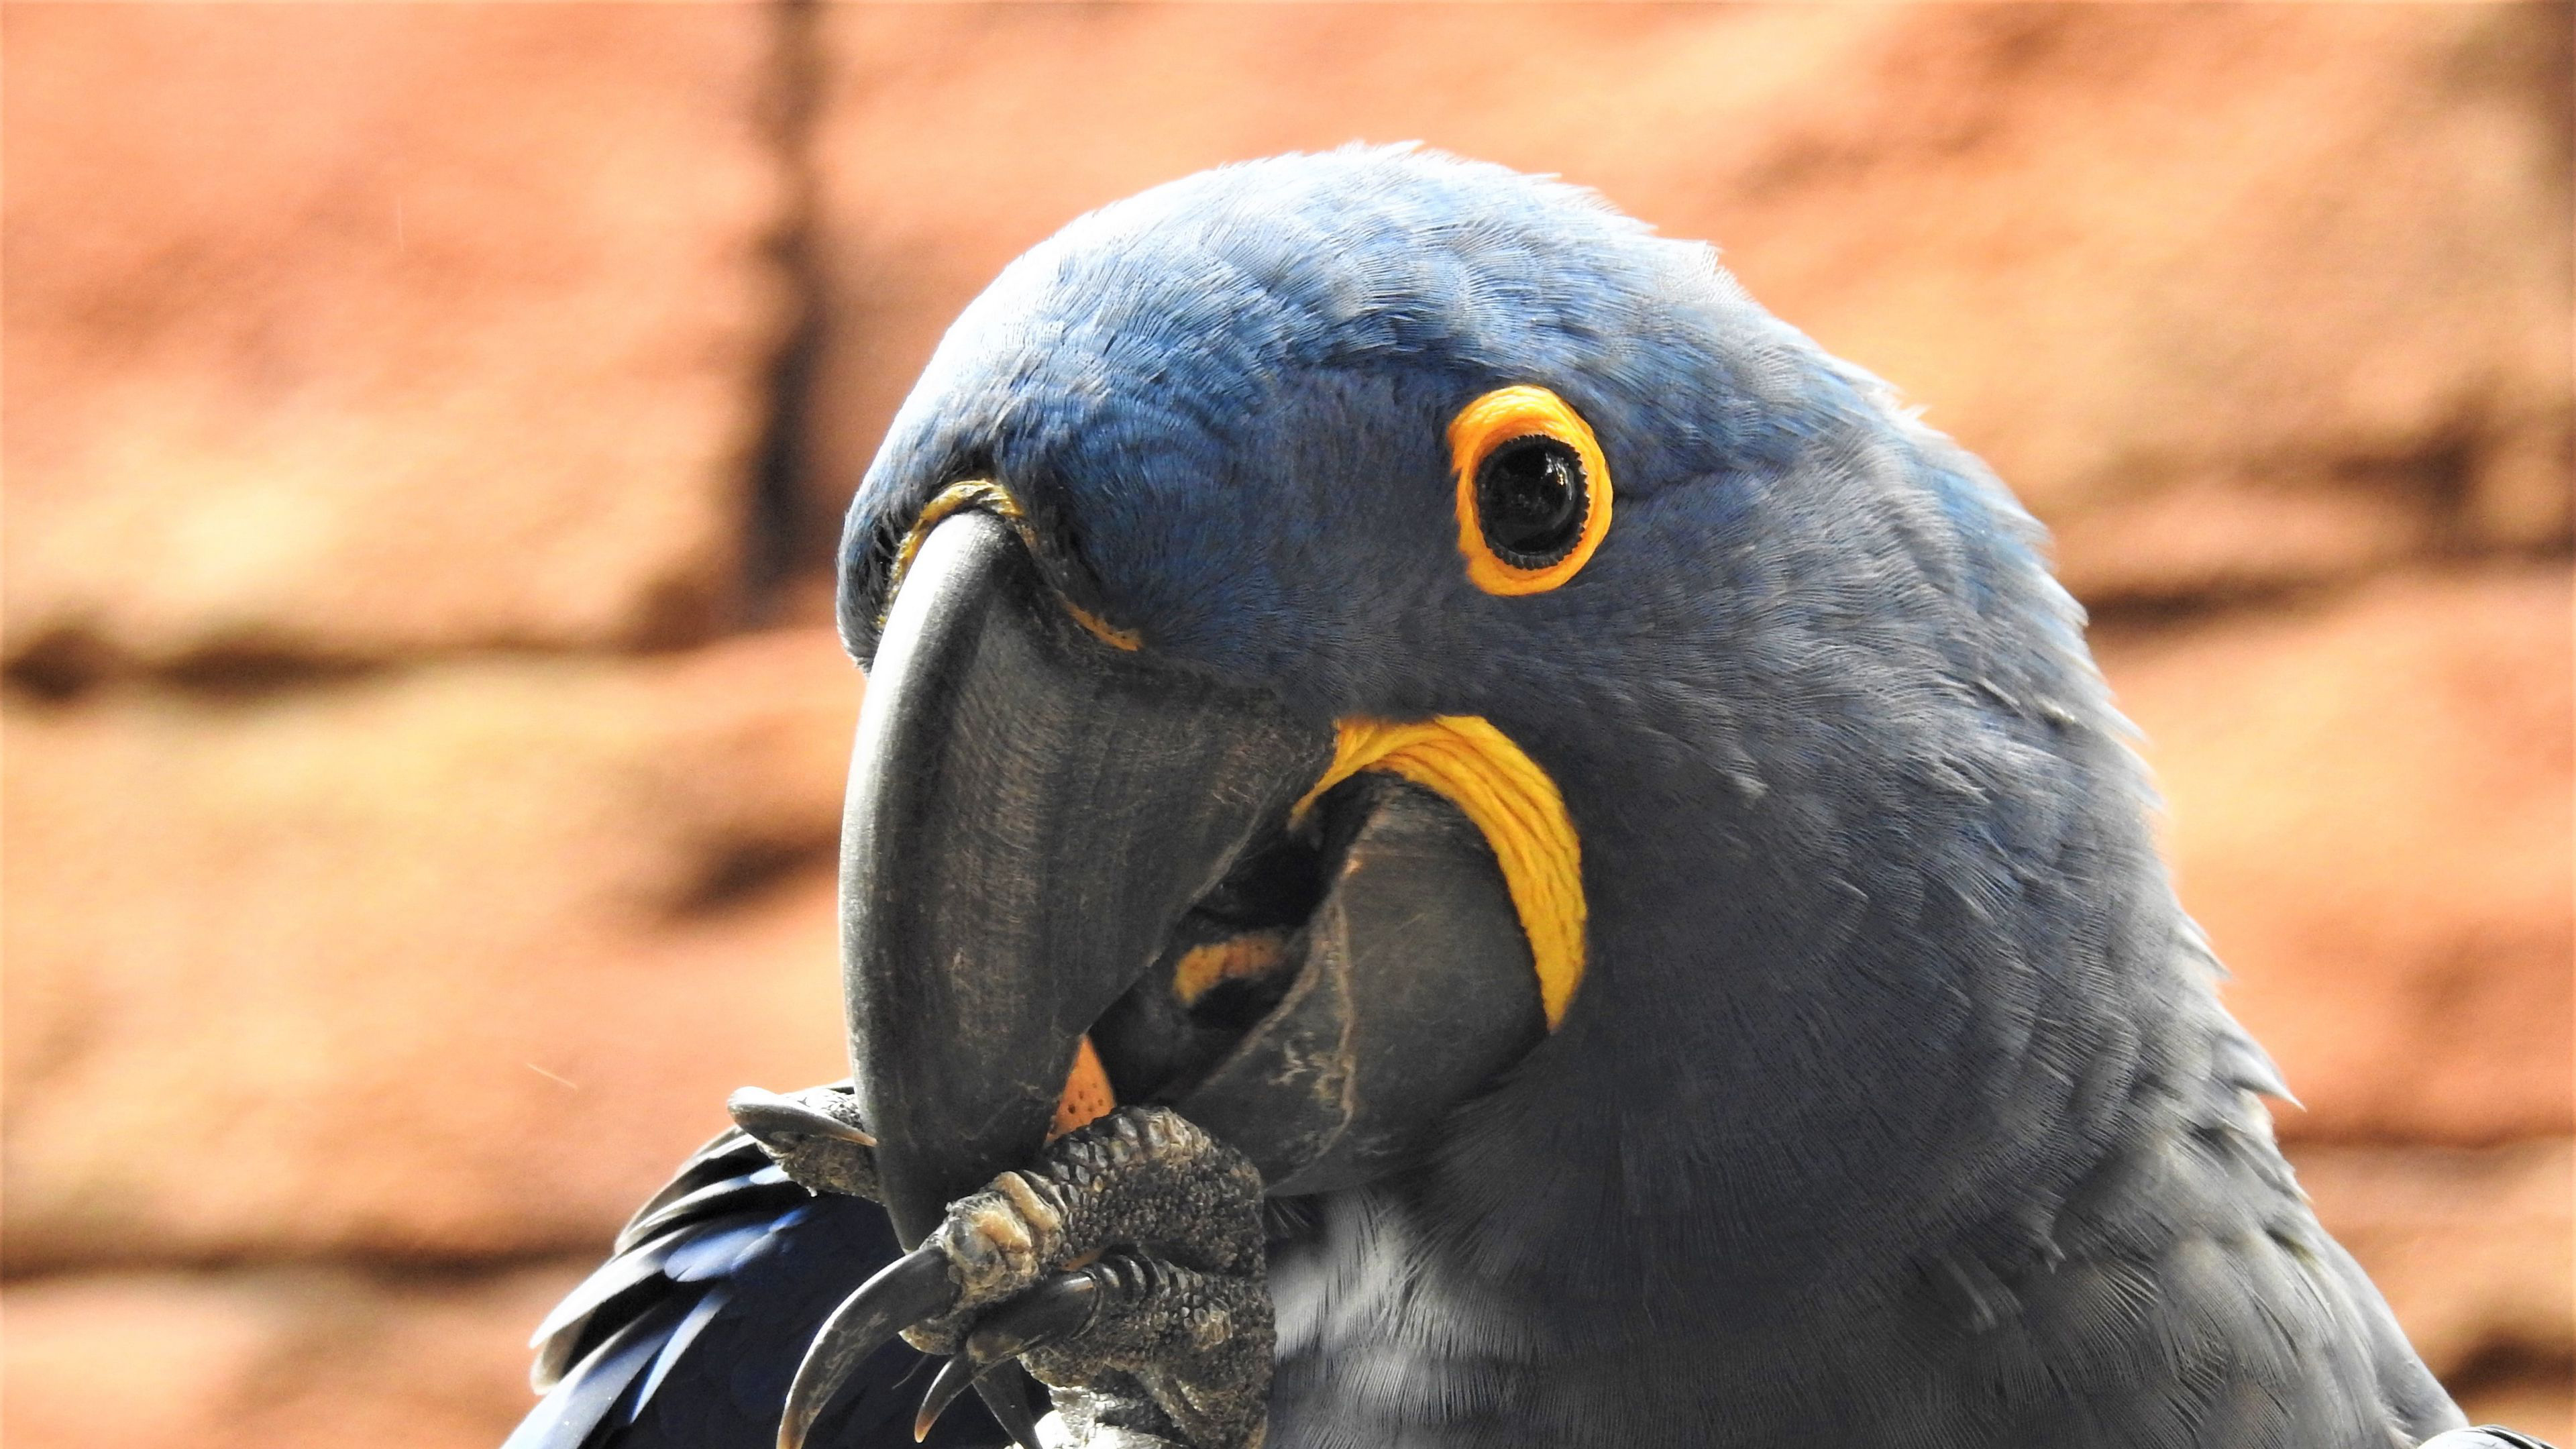 Parrot Beak Bird 4K HD